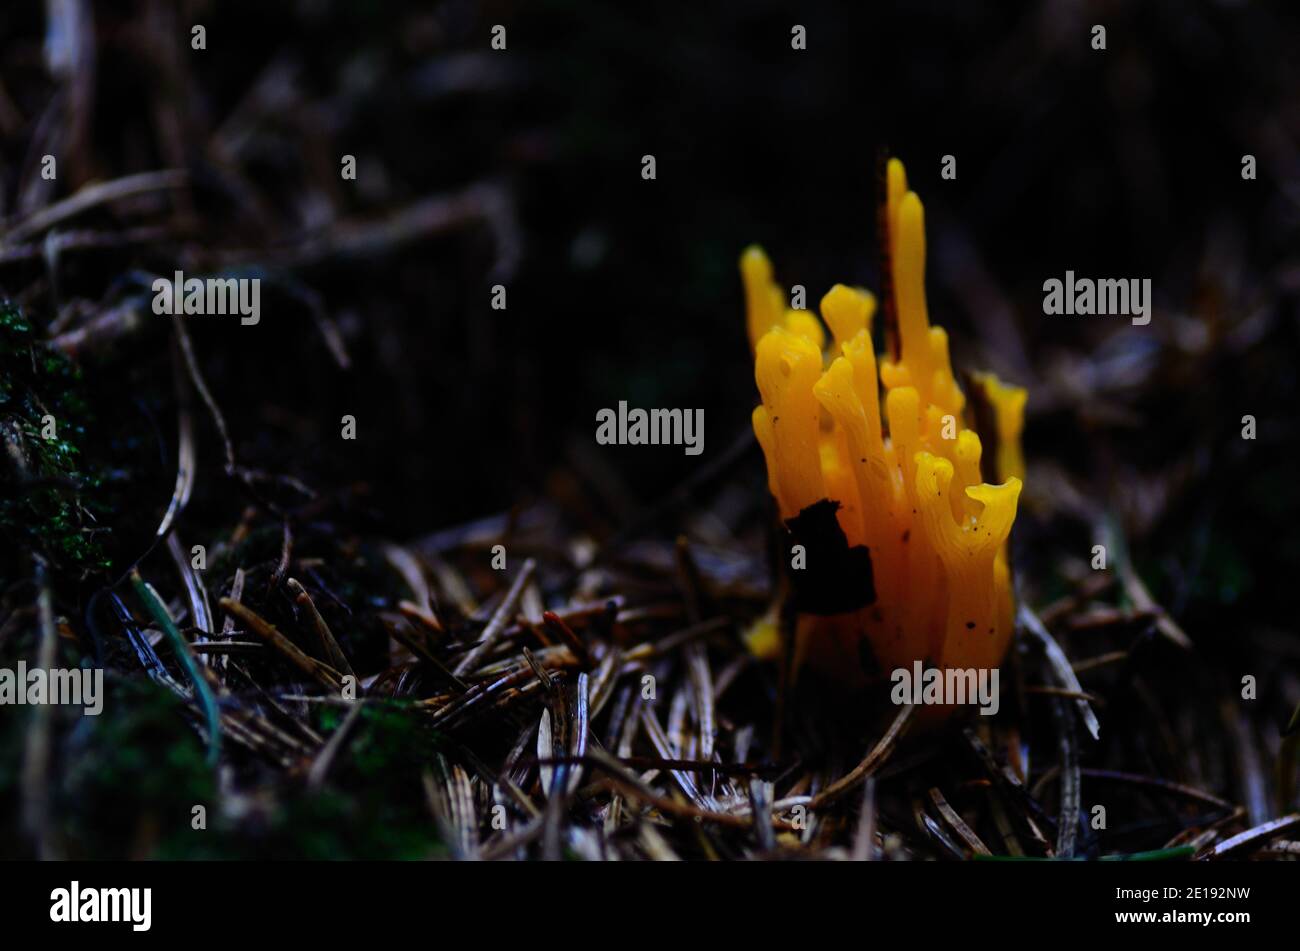 orange coral mushroom in forest floor full of needles Stock Photo